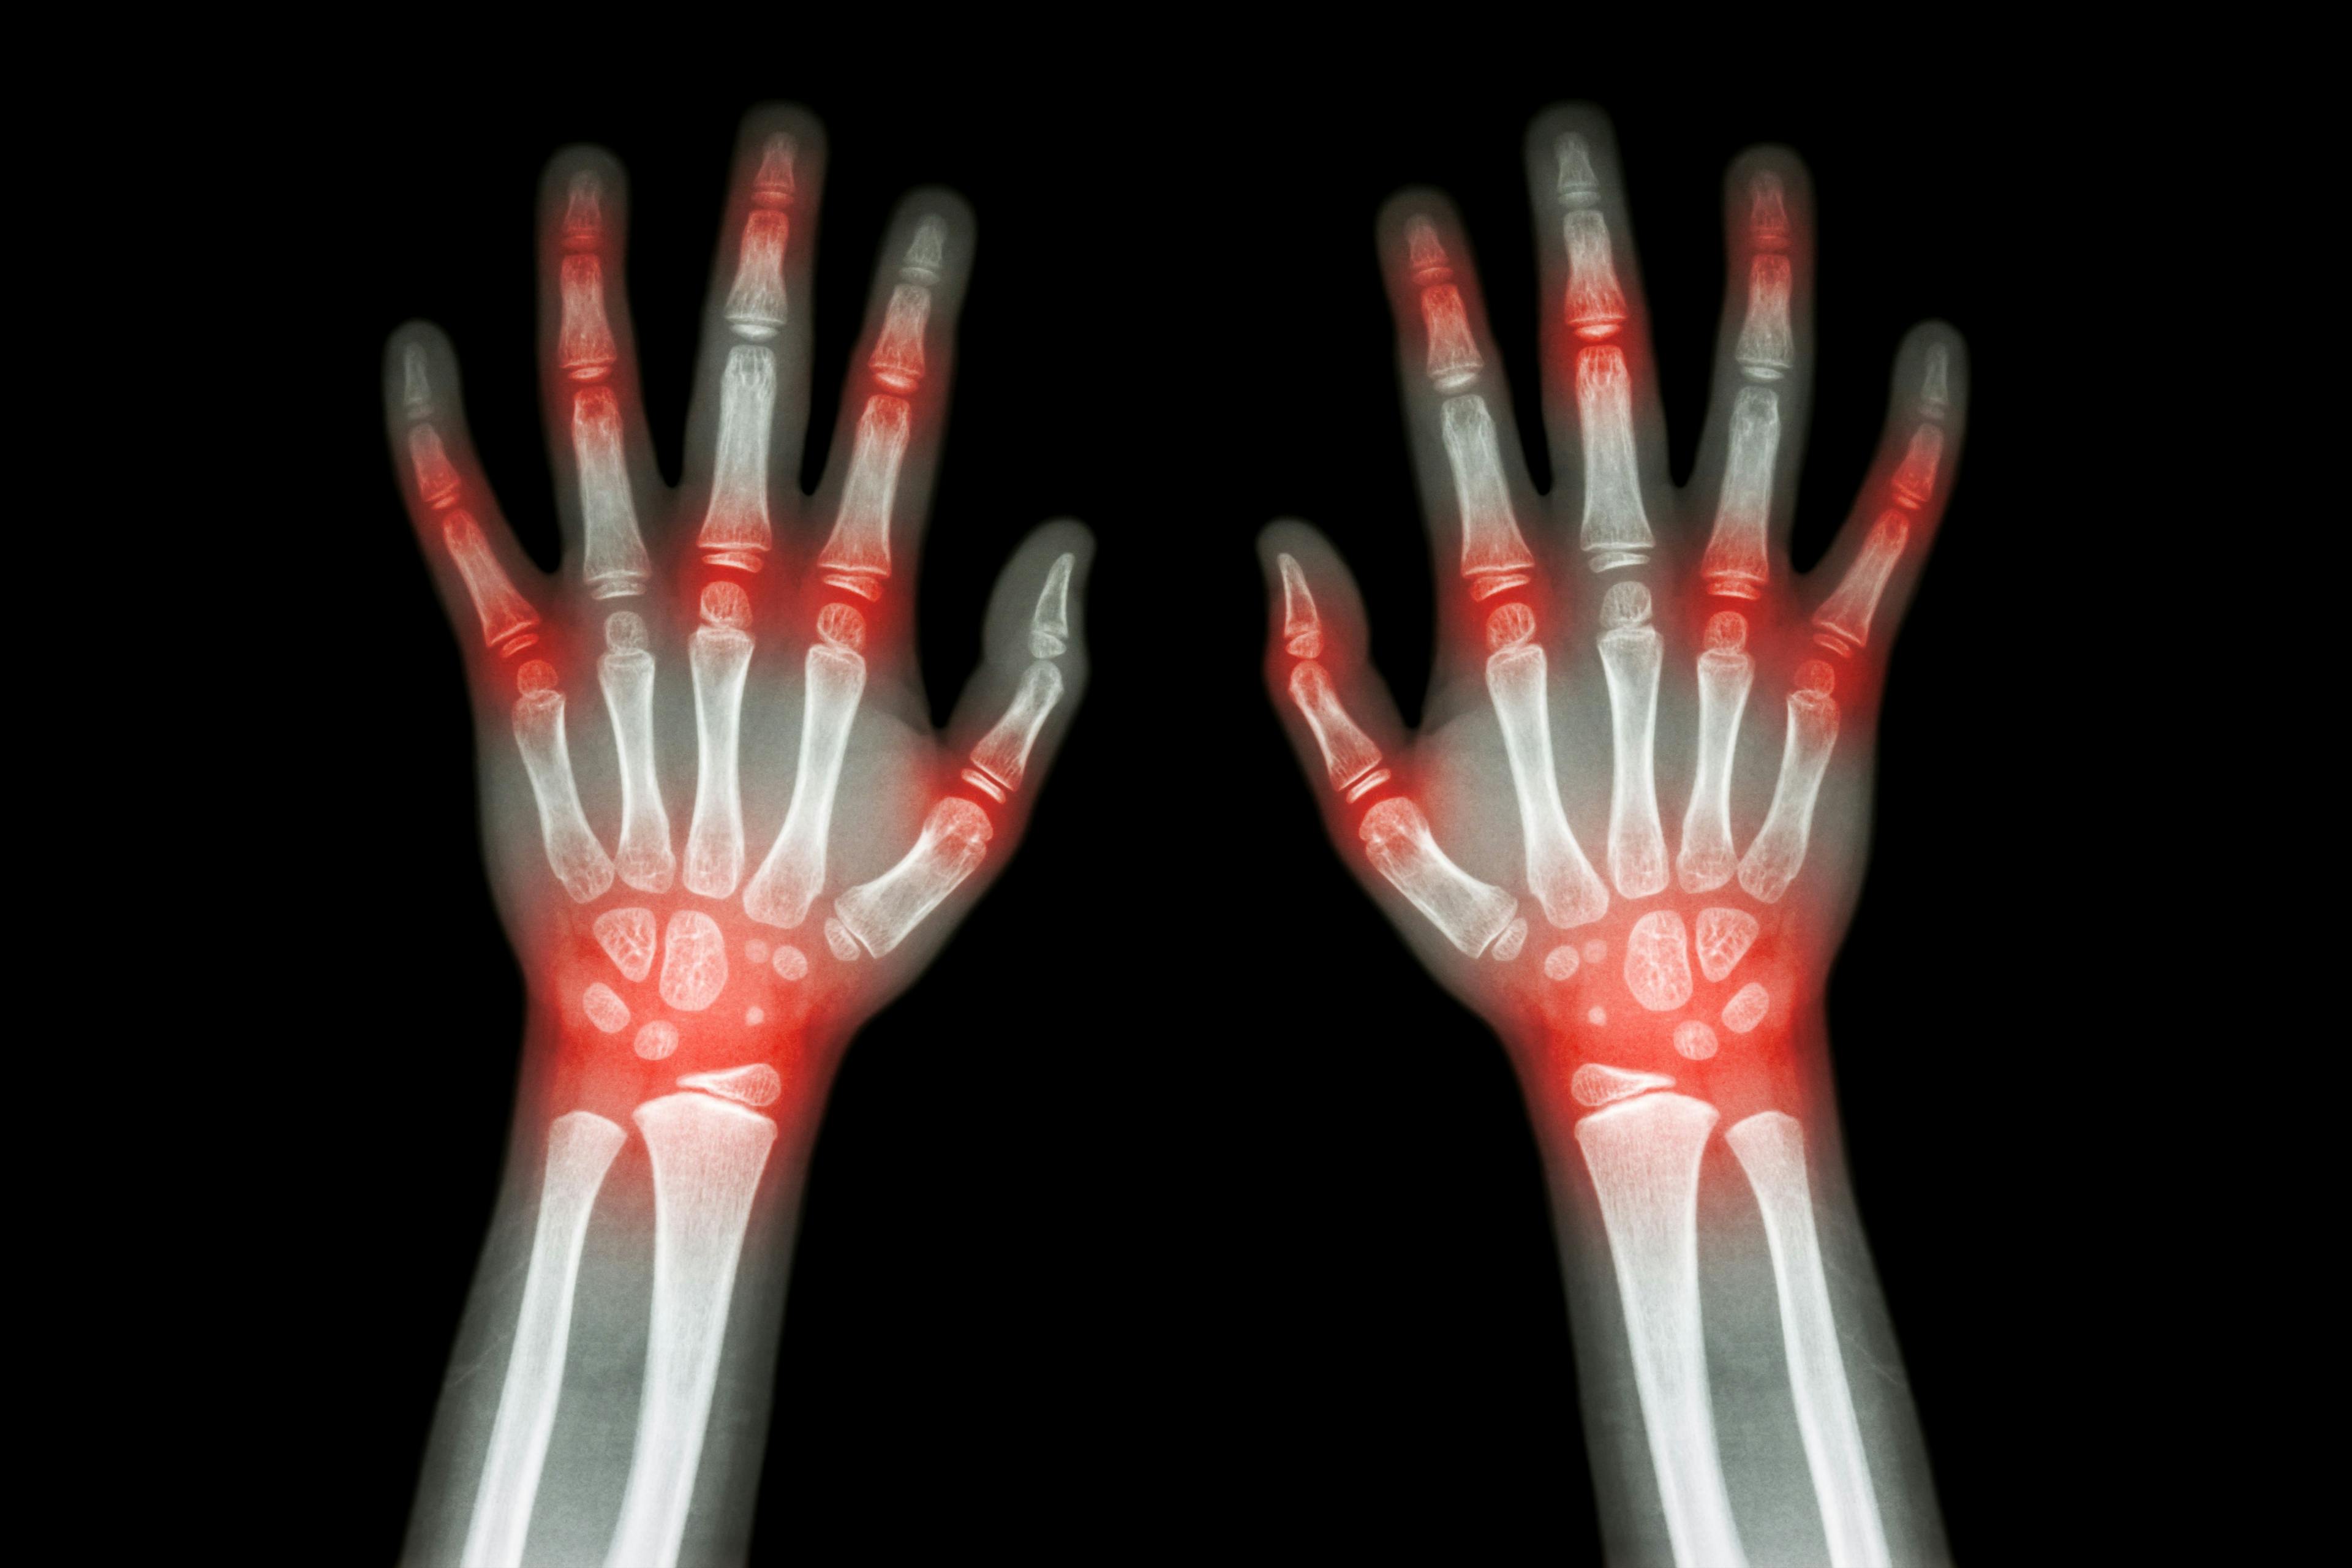 Familial autoimmune diseases linked to pediatric juvenile idiopathic arthritis